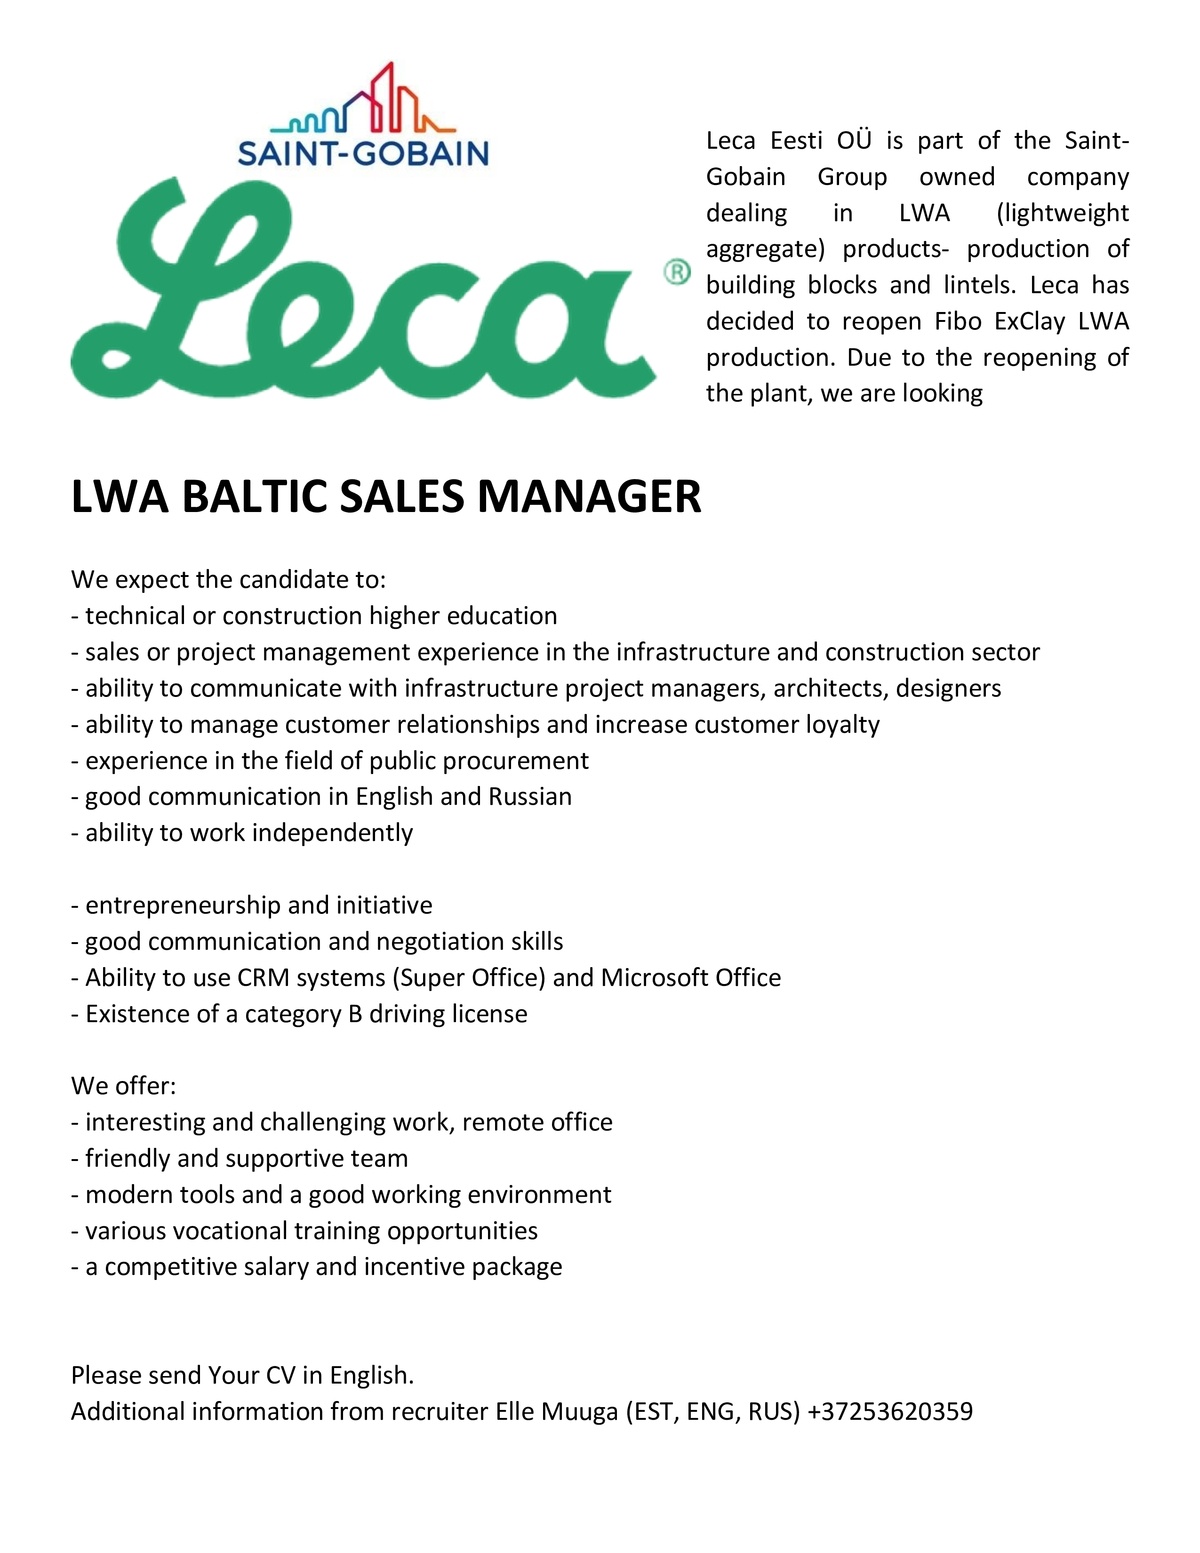 Leca Eesti OÜ (SAINT-GOBAIN) LWA Baltic Sales Manager